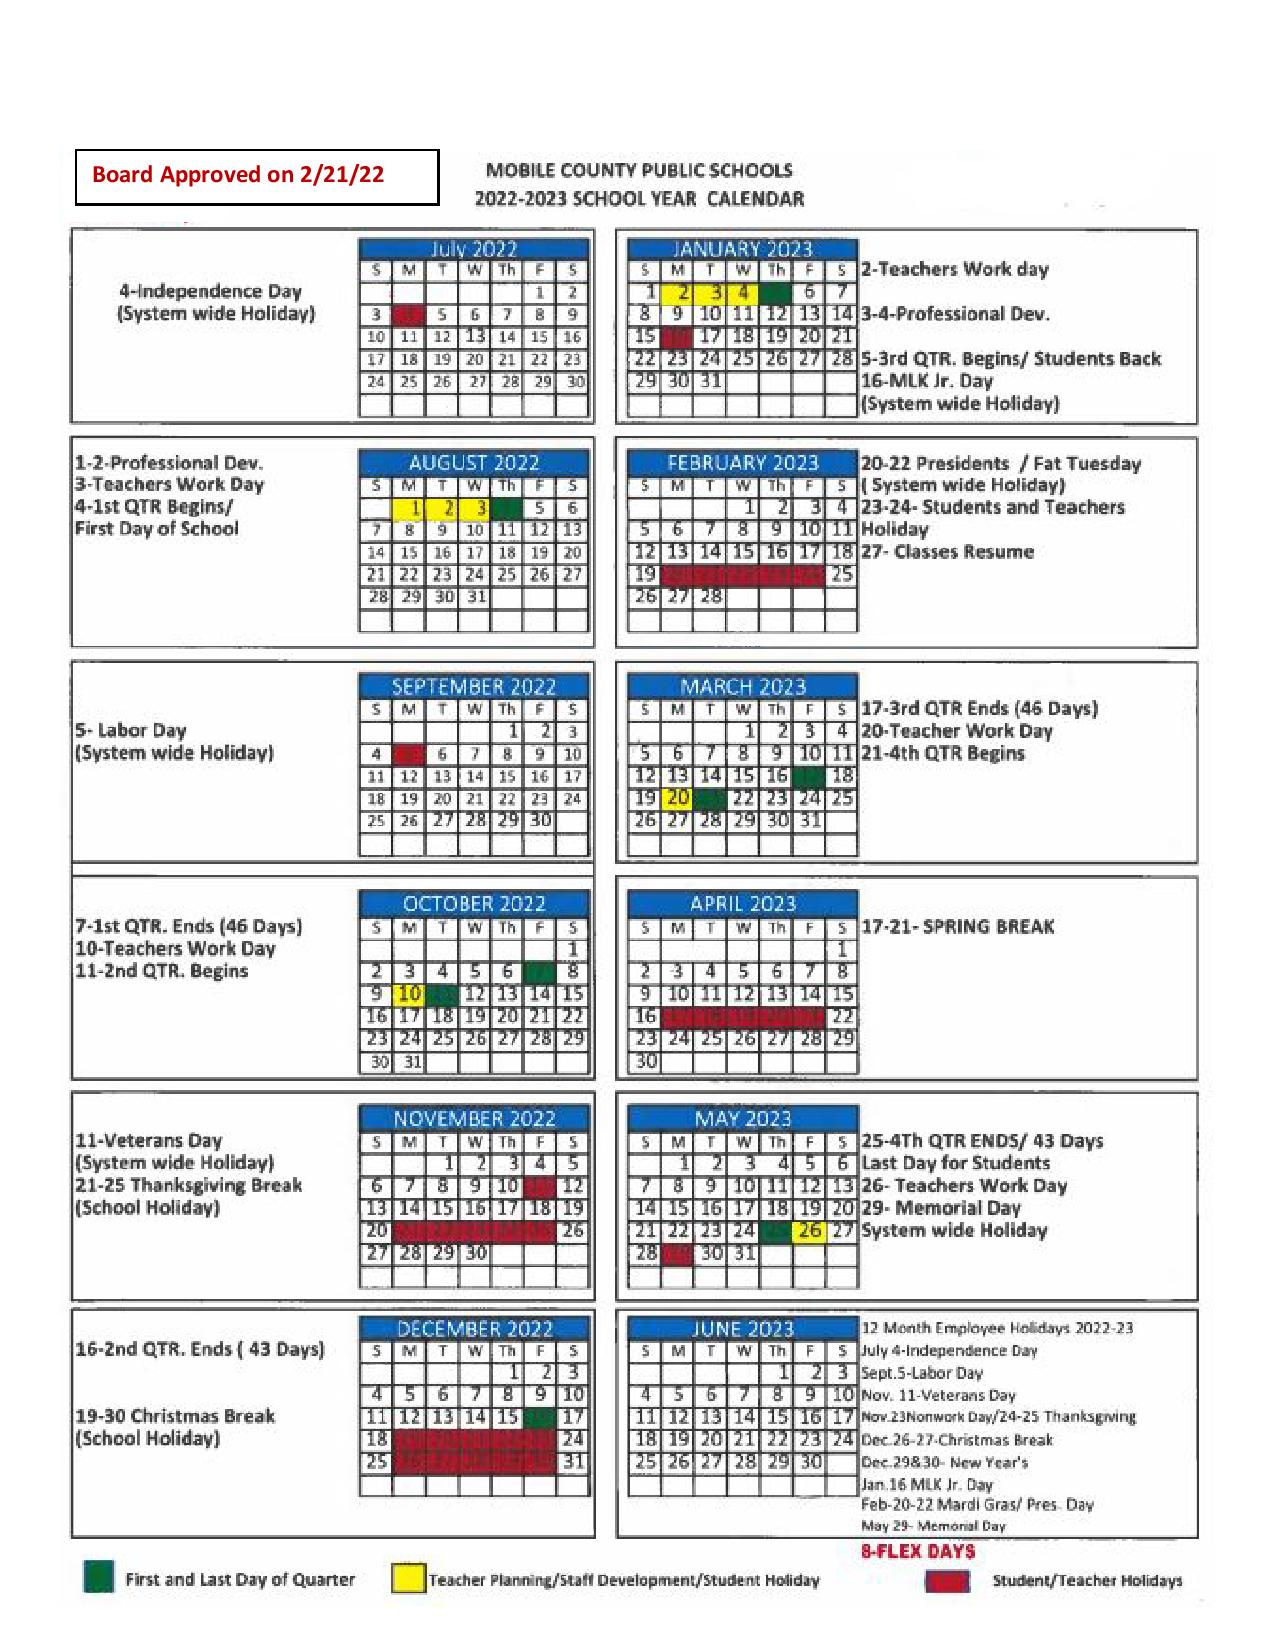 Mobile County Public Schools Calendar 